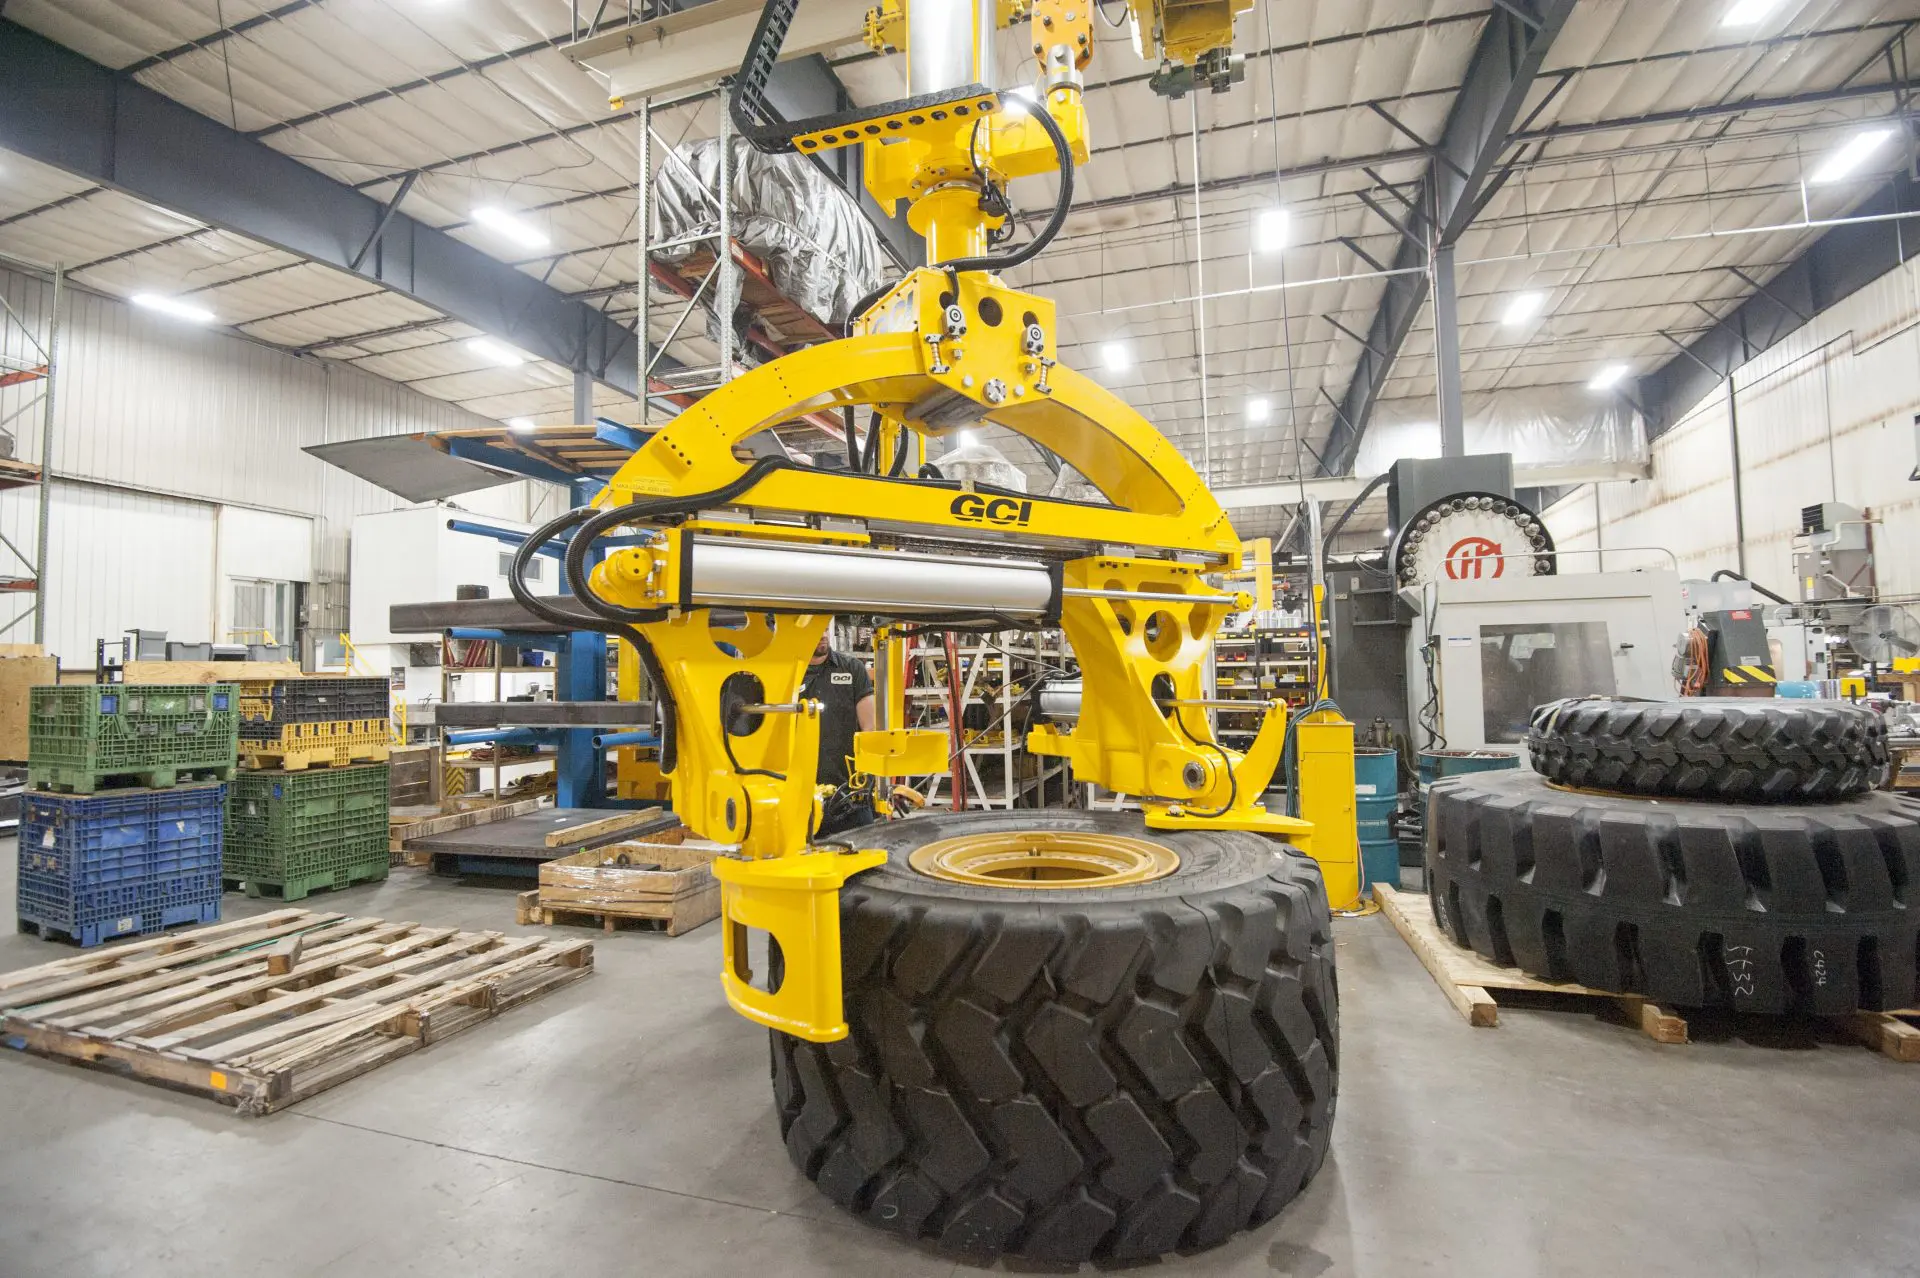 Manipulador GCI de montaje superior que levanta neumáticos Caterpillar de 3,000 lb de diferentes tamaños